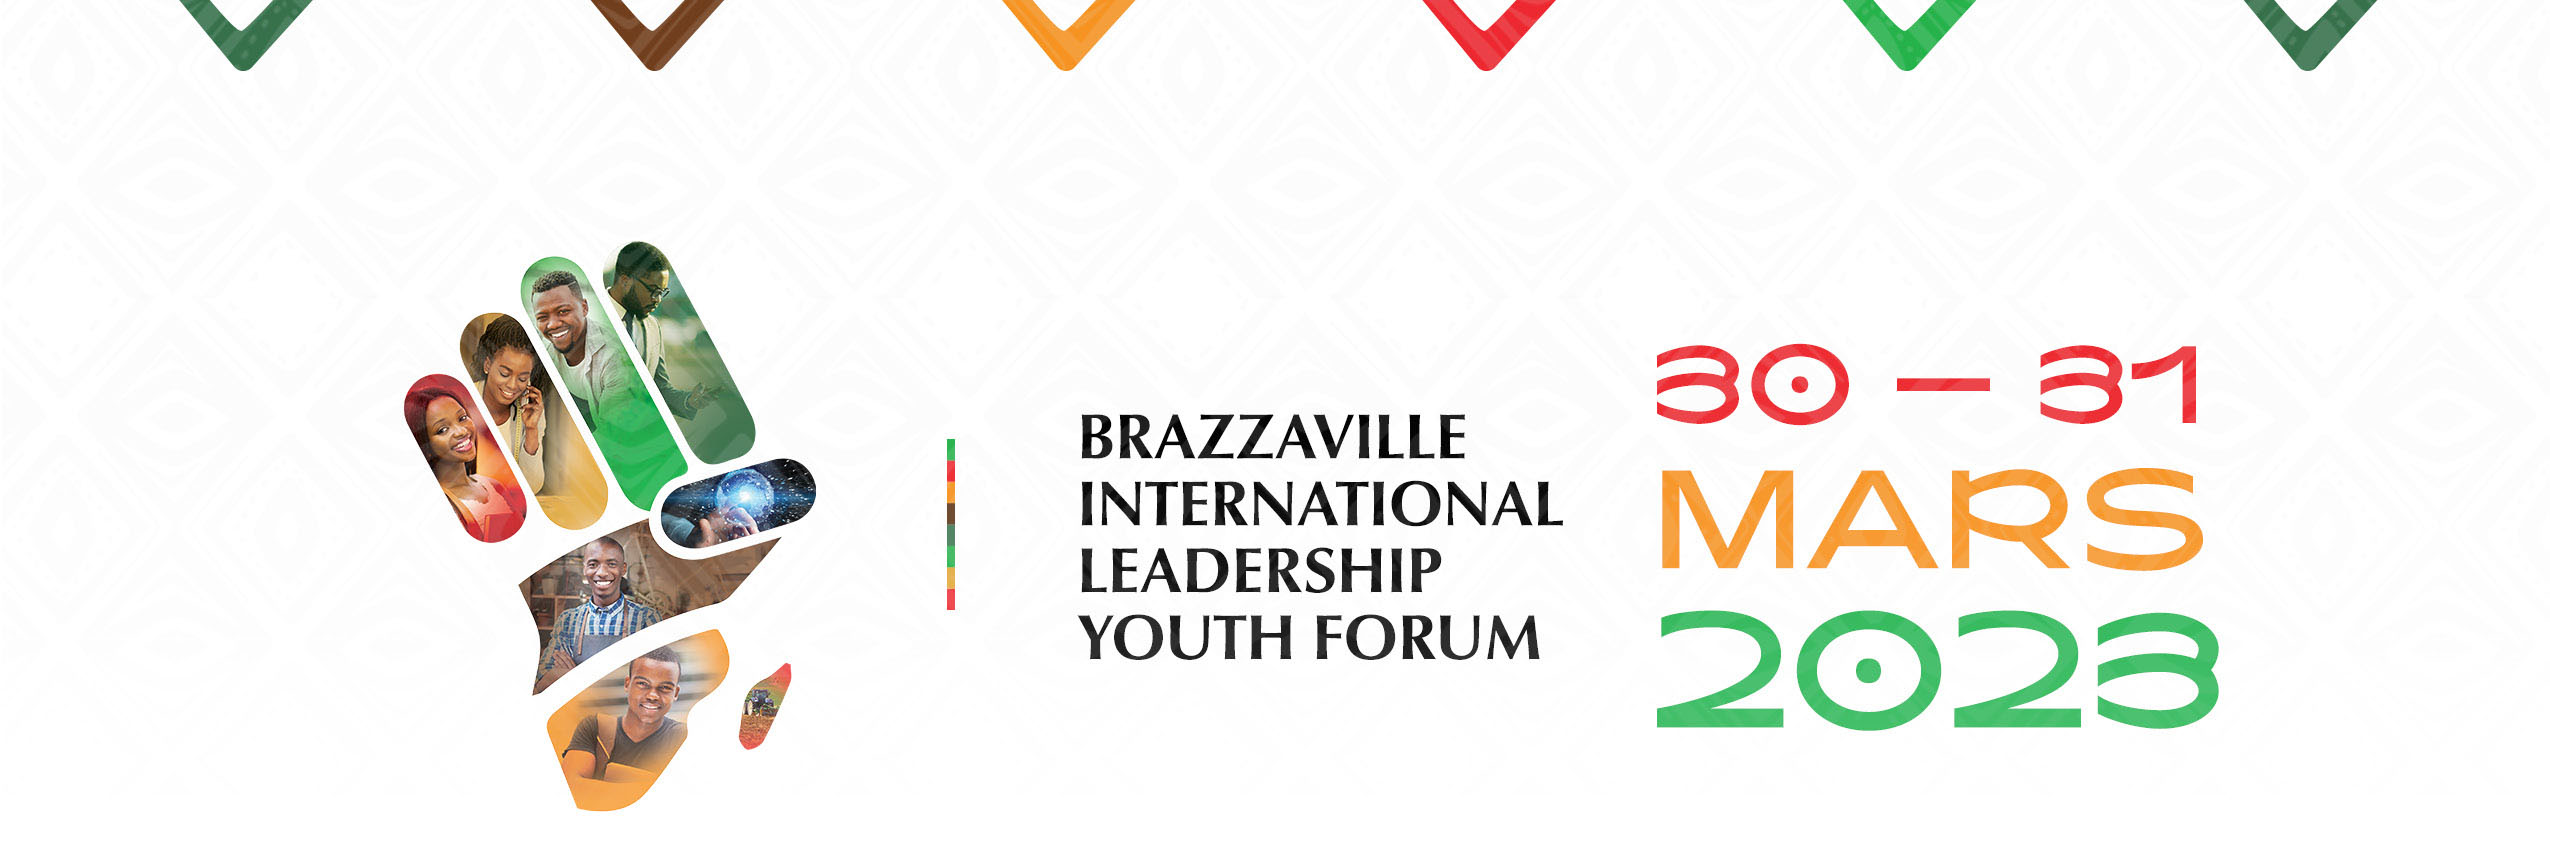 Brazzaville accueille, fin mars, le premier grand Forum de la jeunesse africaine